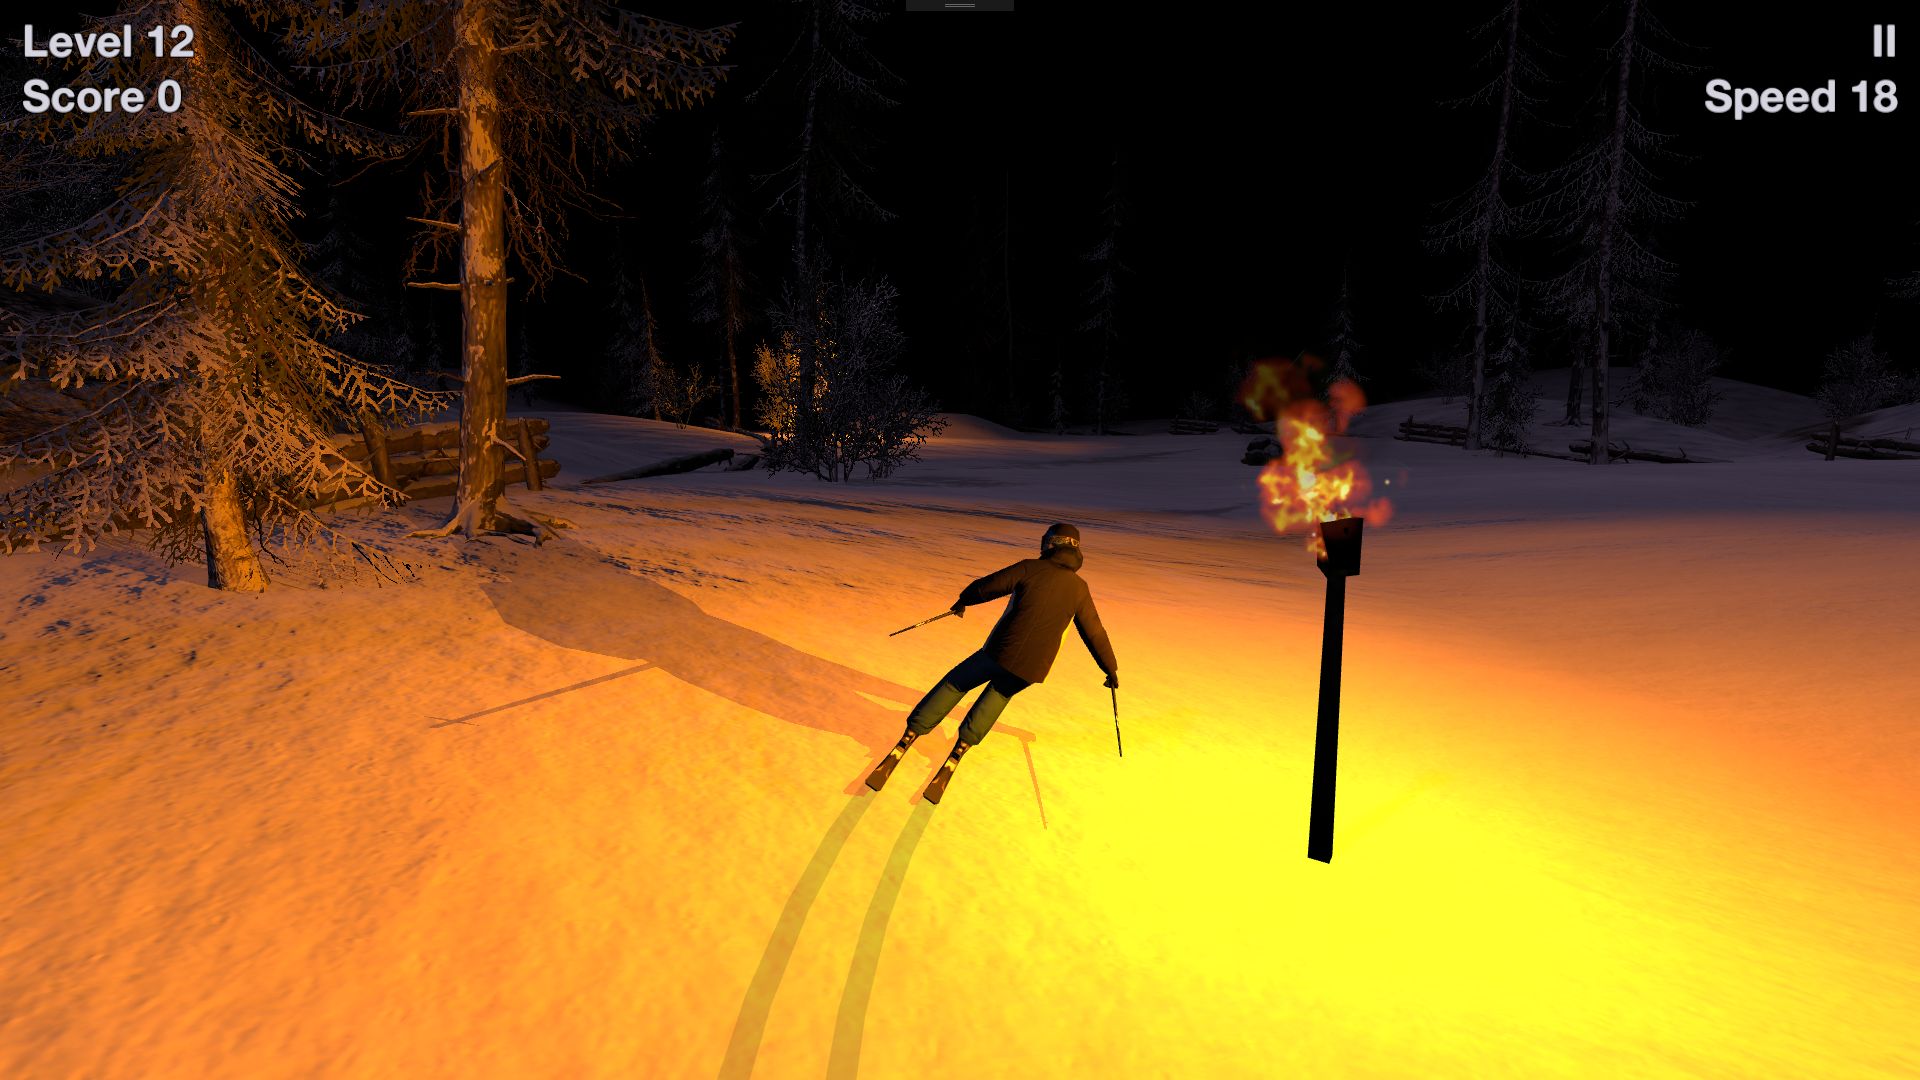 Baixar Alpine Ski 3 para Android grátis.